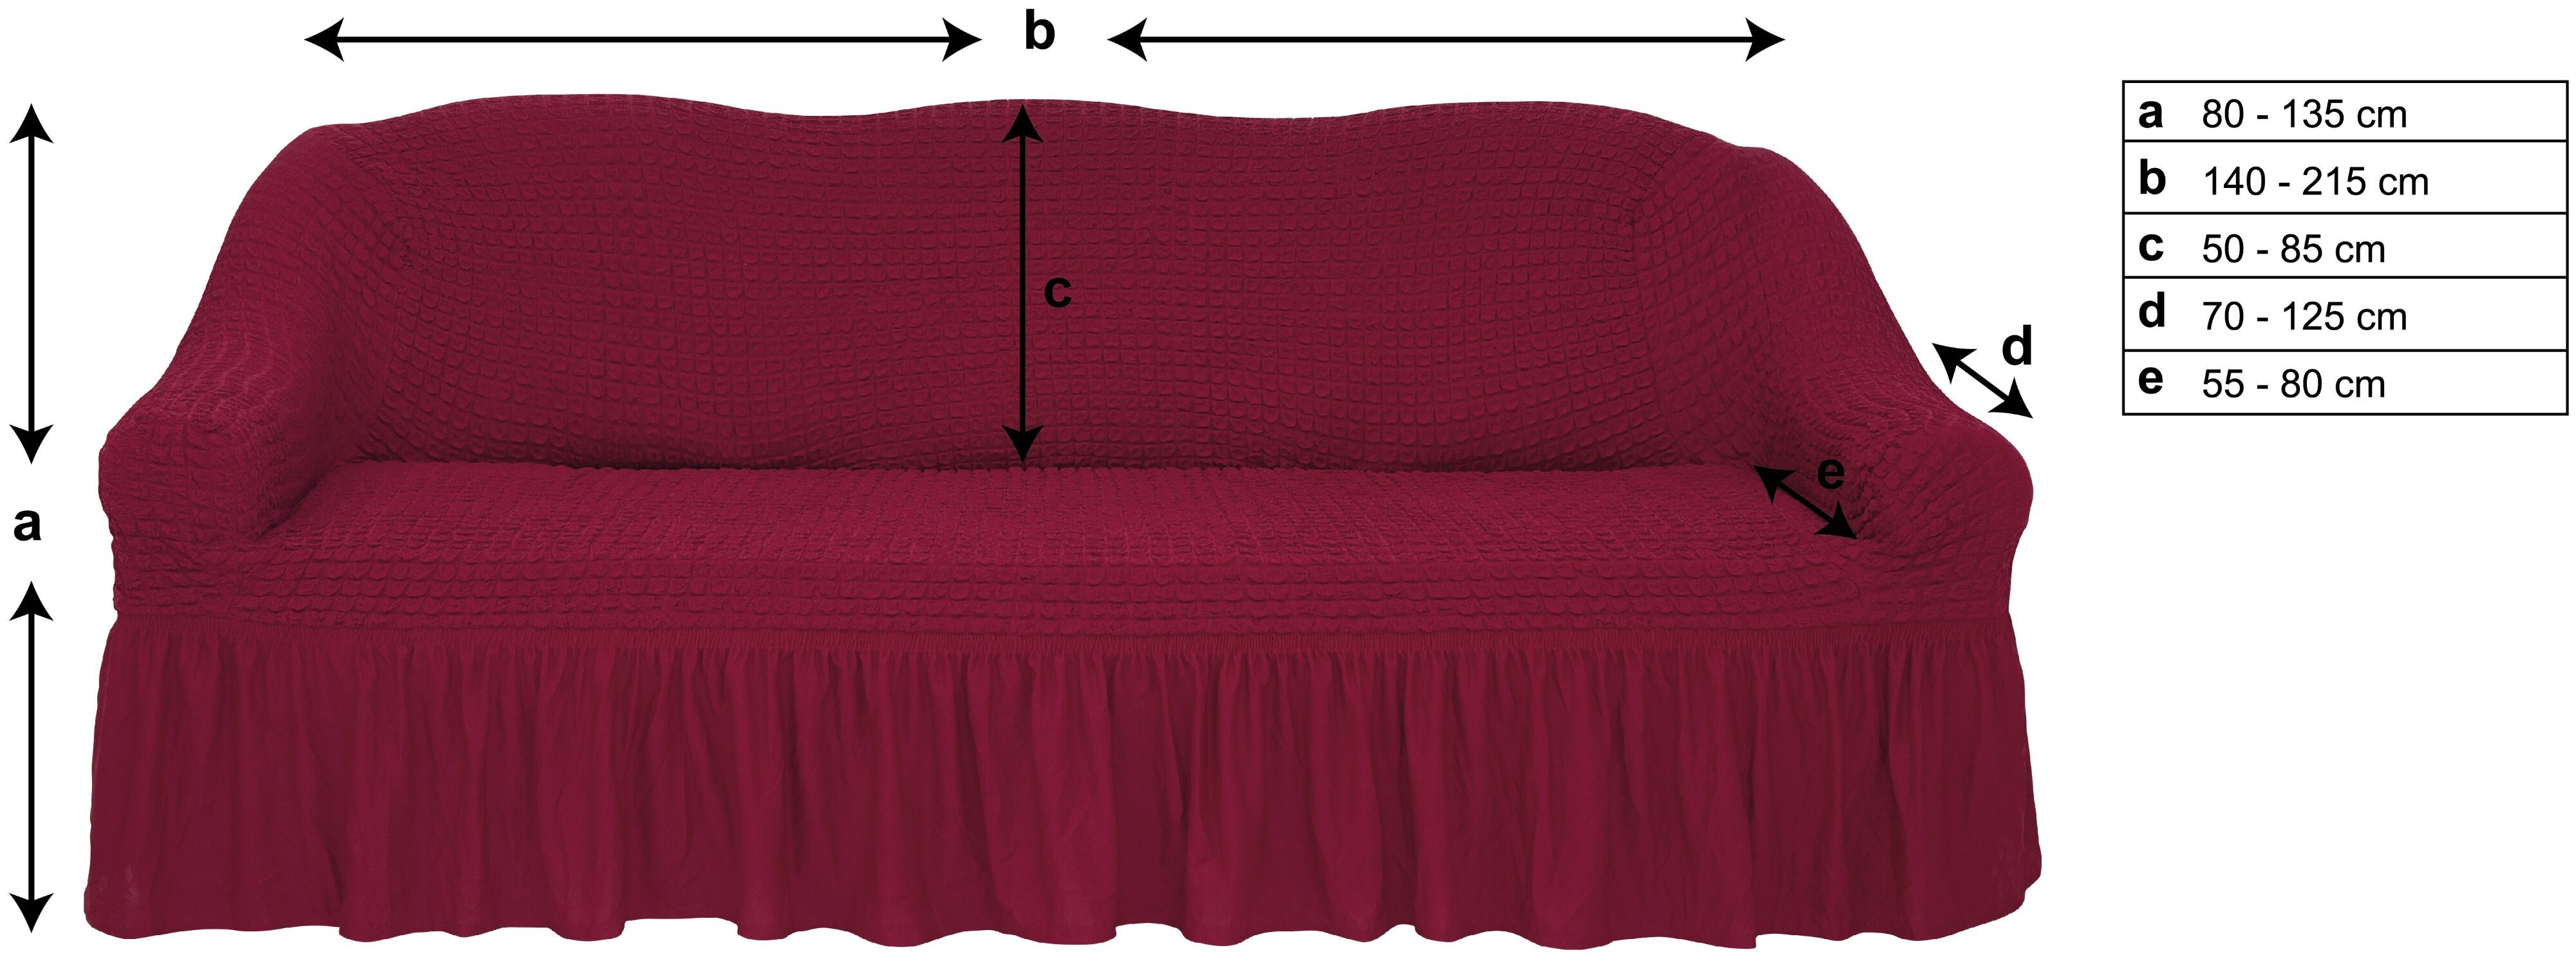 Чехол на диван размер стандарт